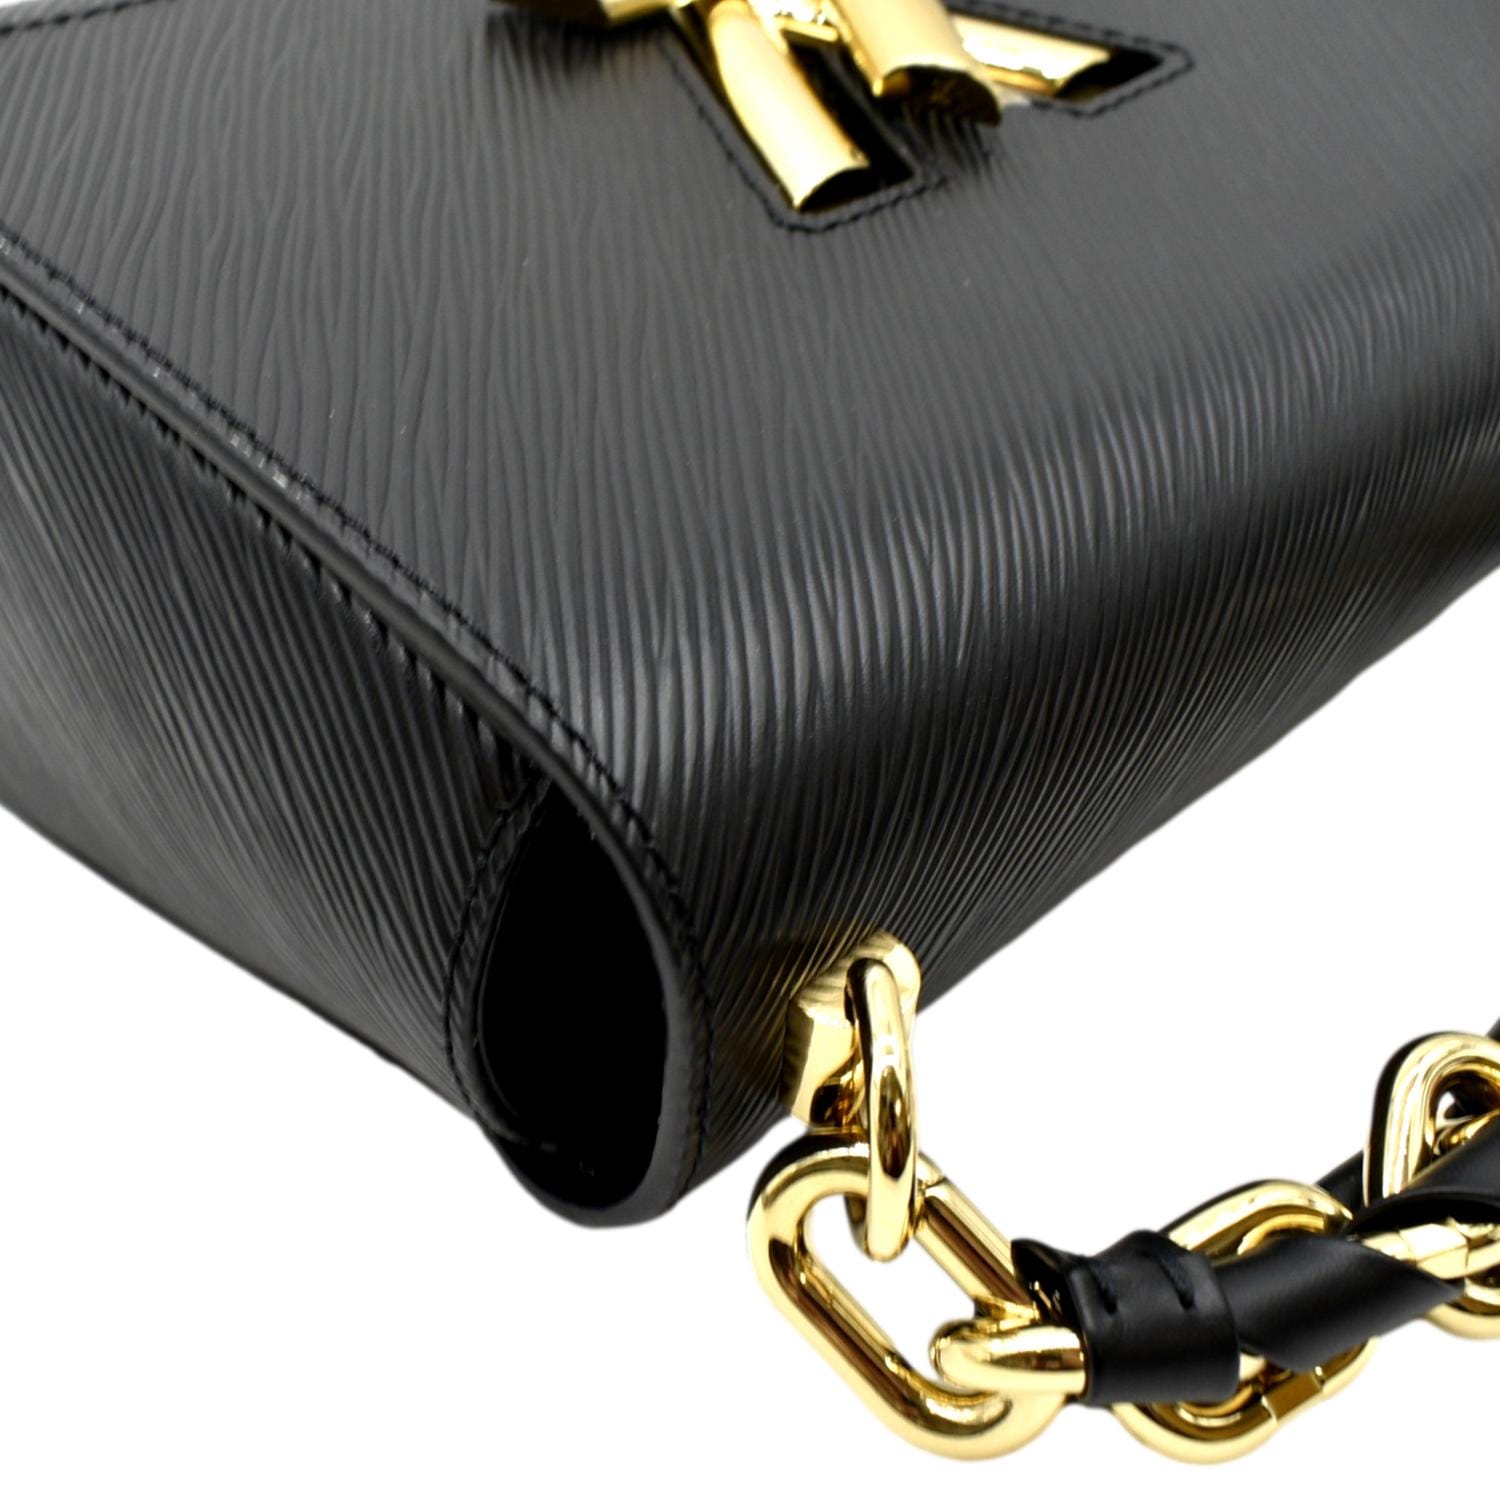 Twist MM Epi Leather in Black - Handbags M57050, L*V – ZAK BAGS ©️